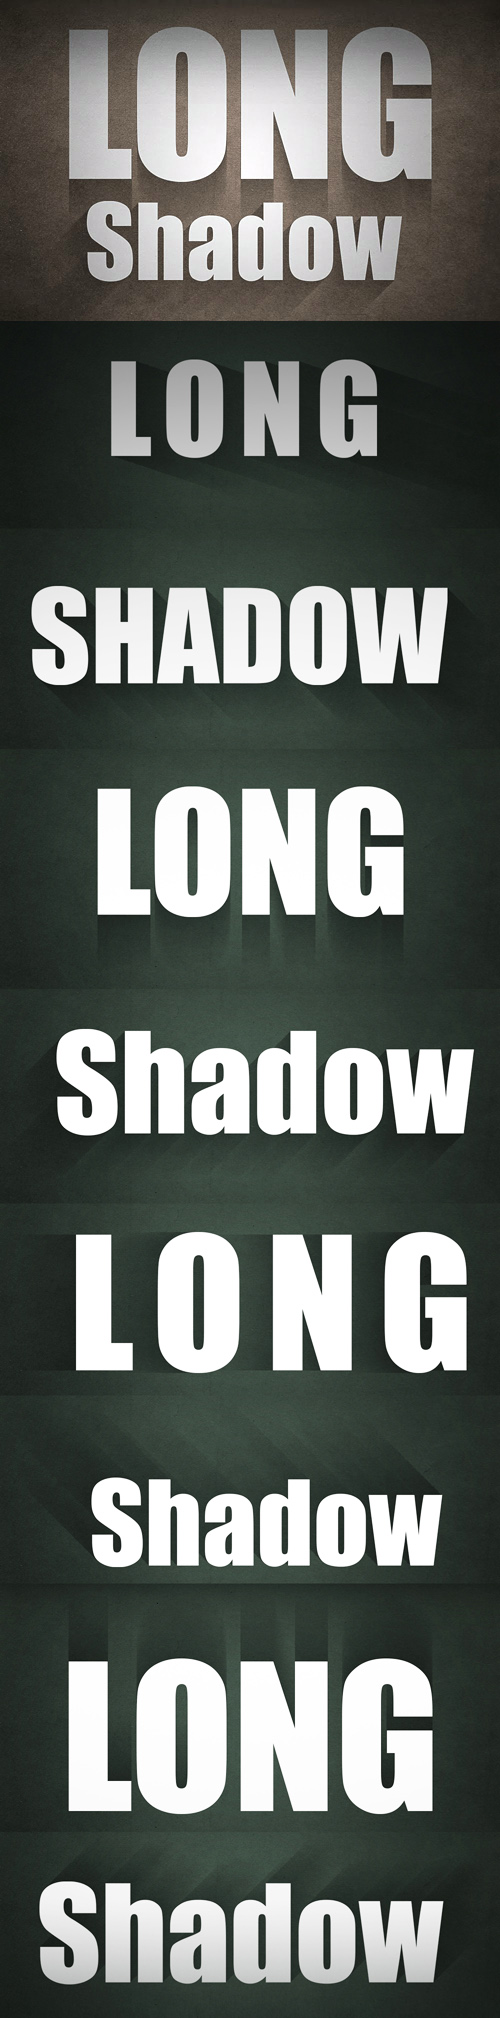 Long Shadow Effects in PSD